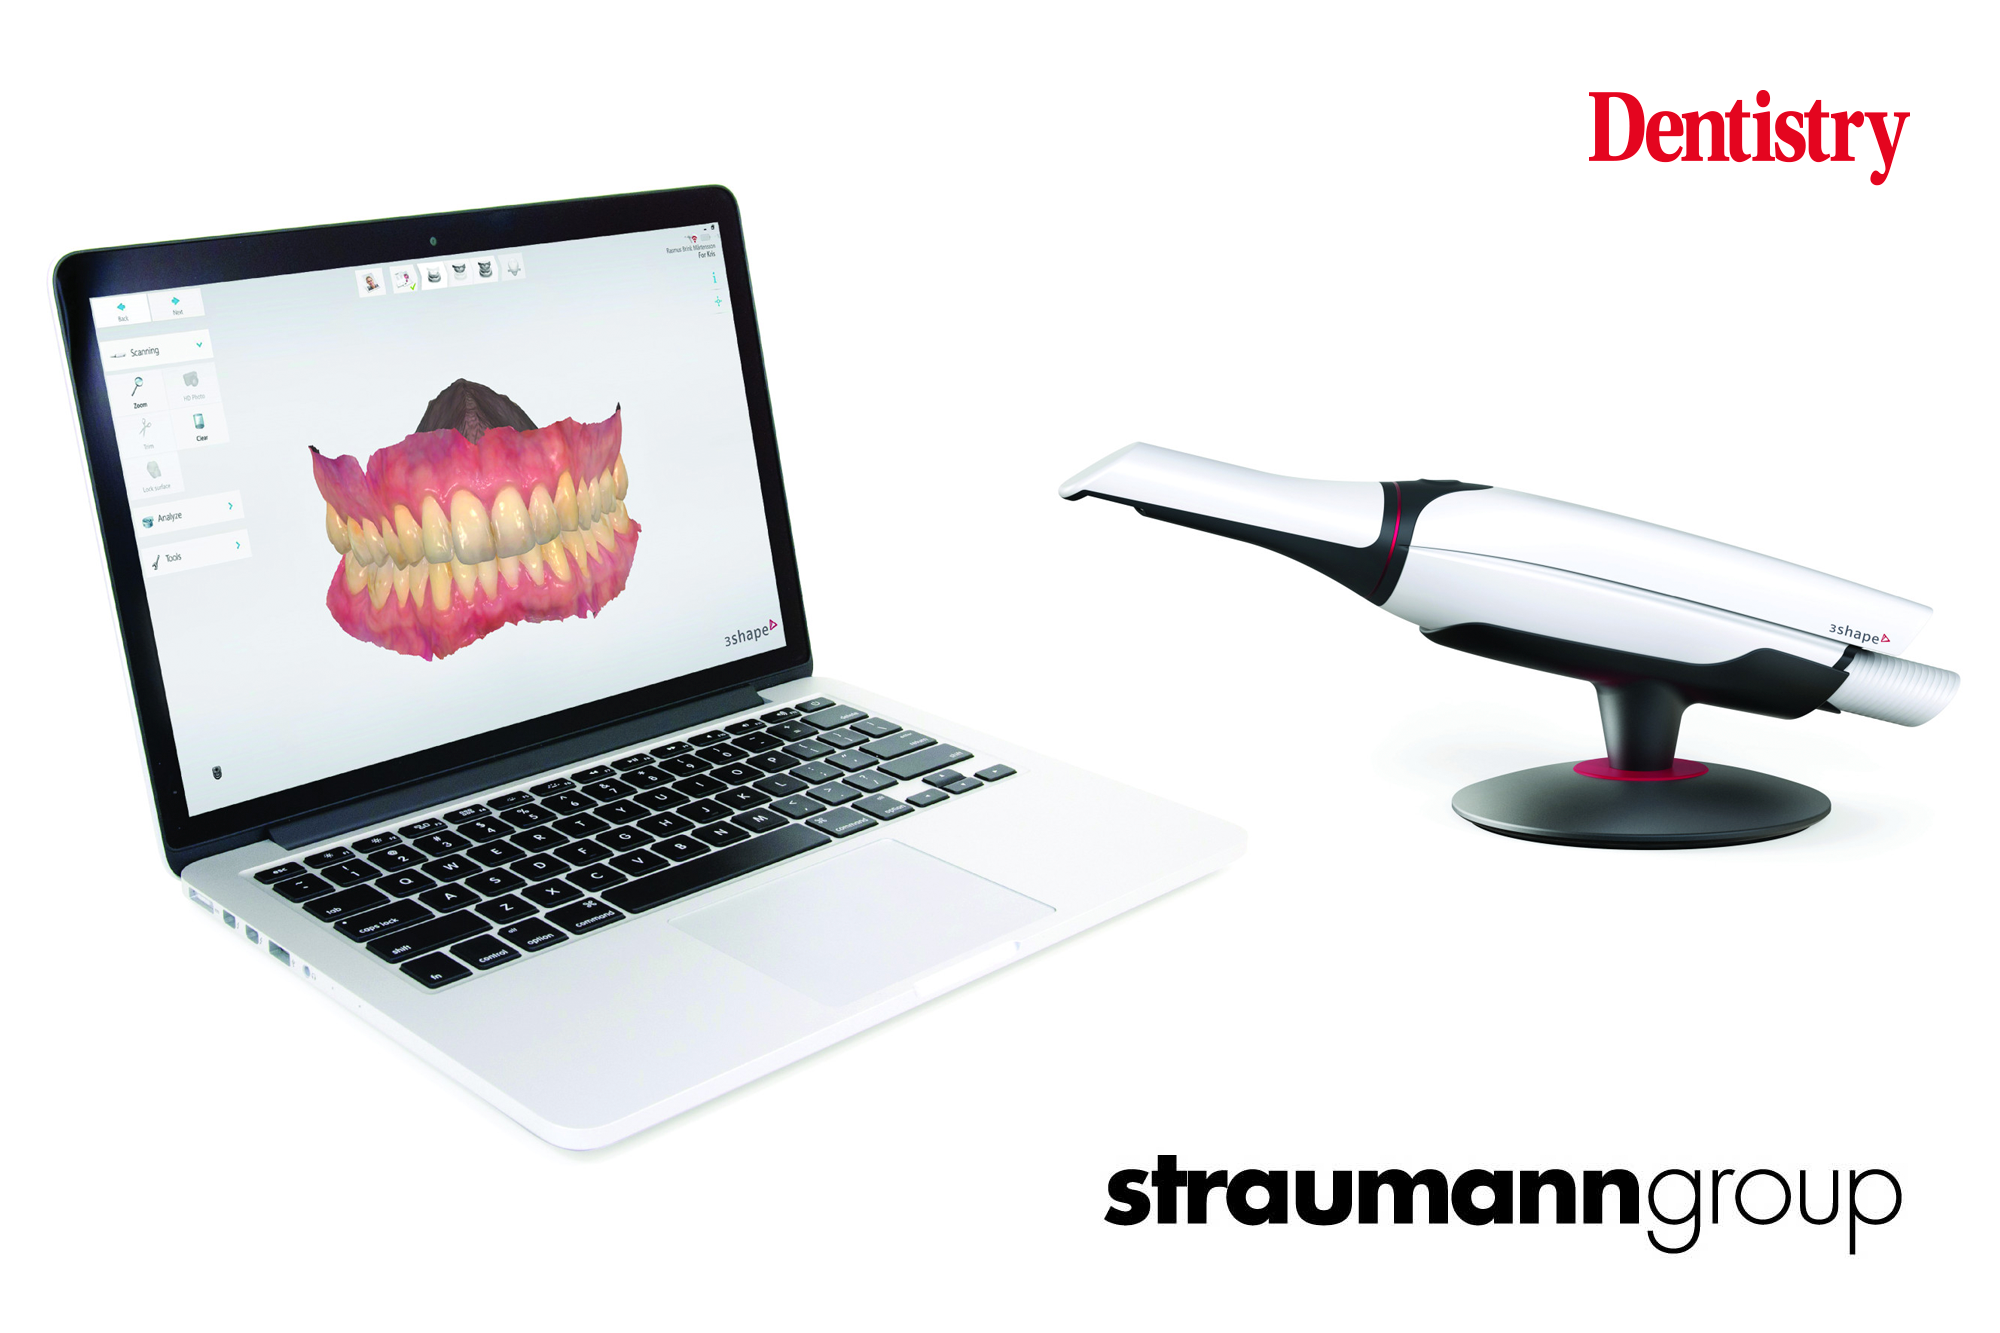 straumann on digital smile design